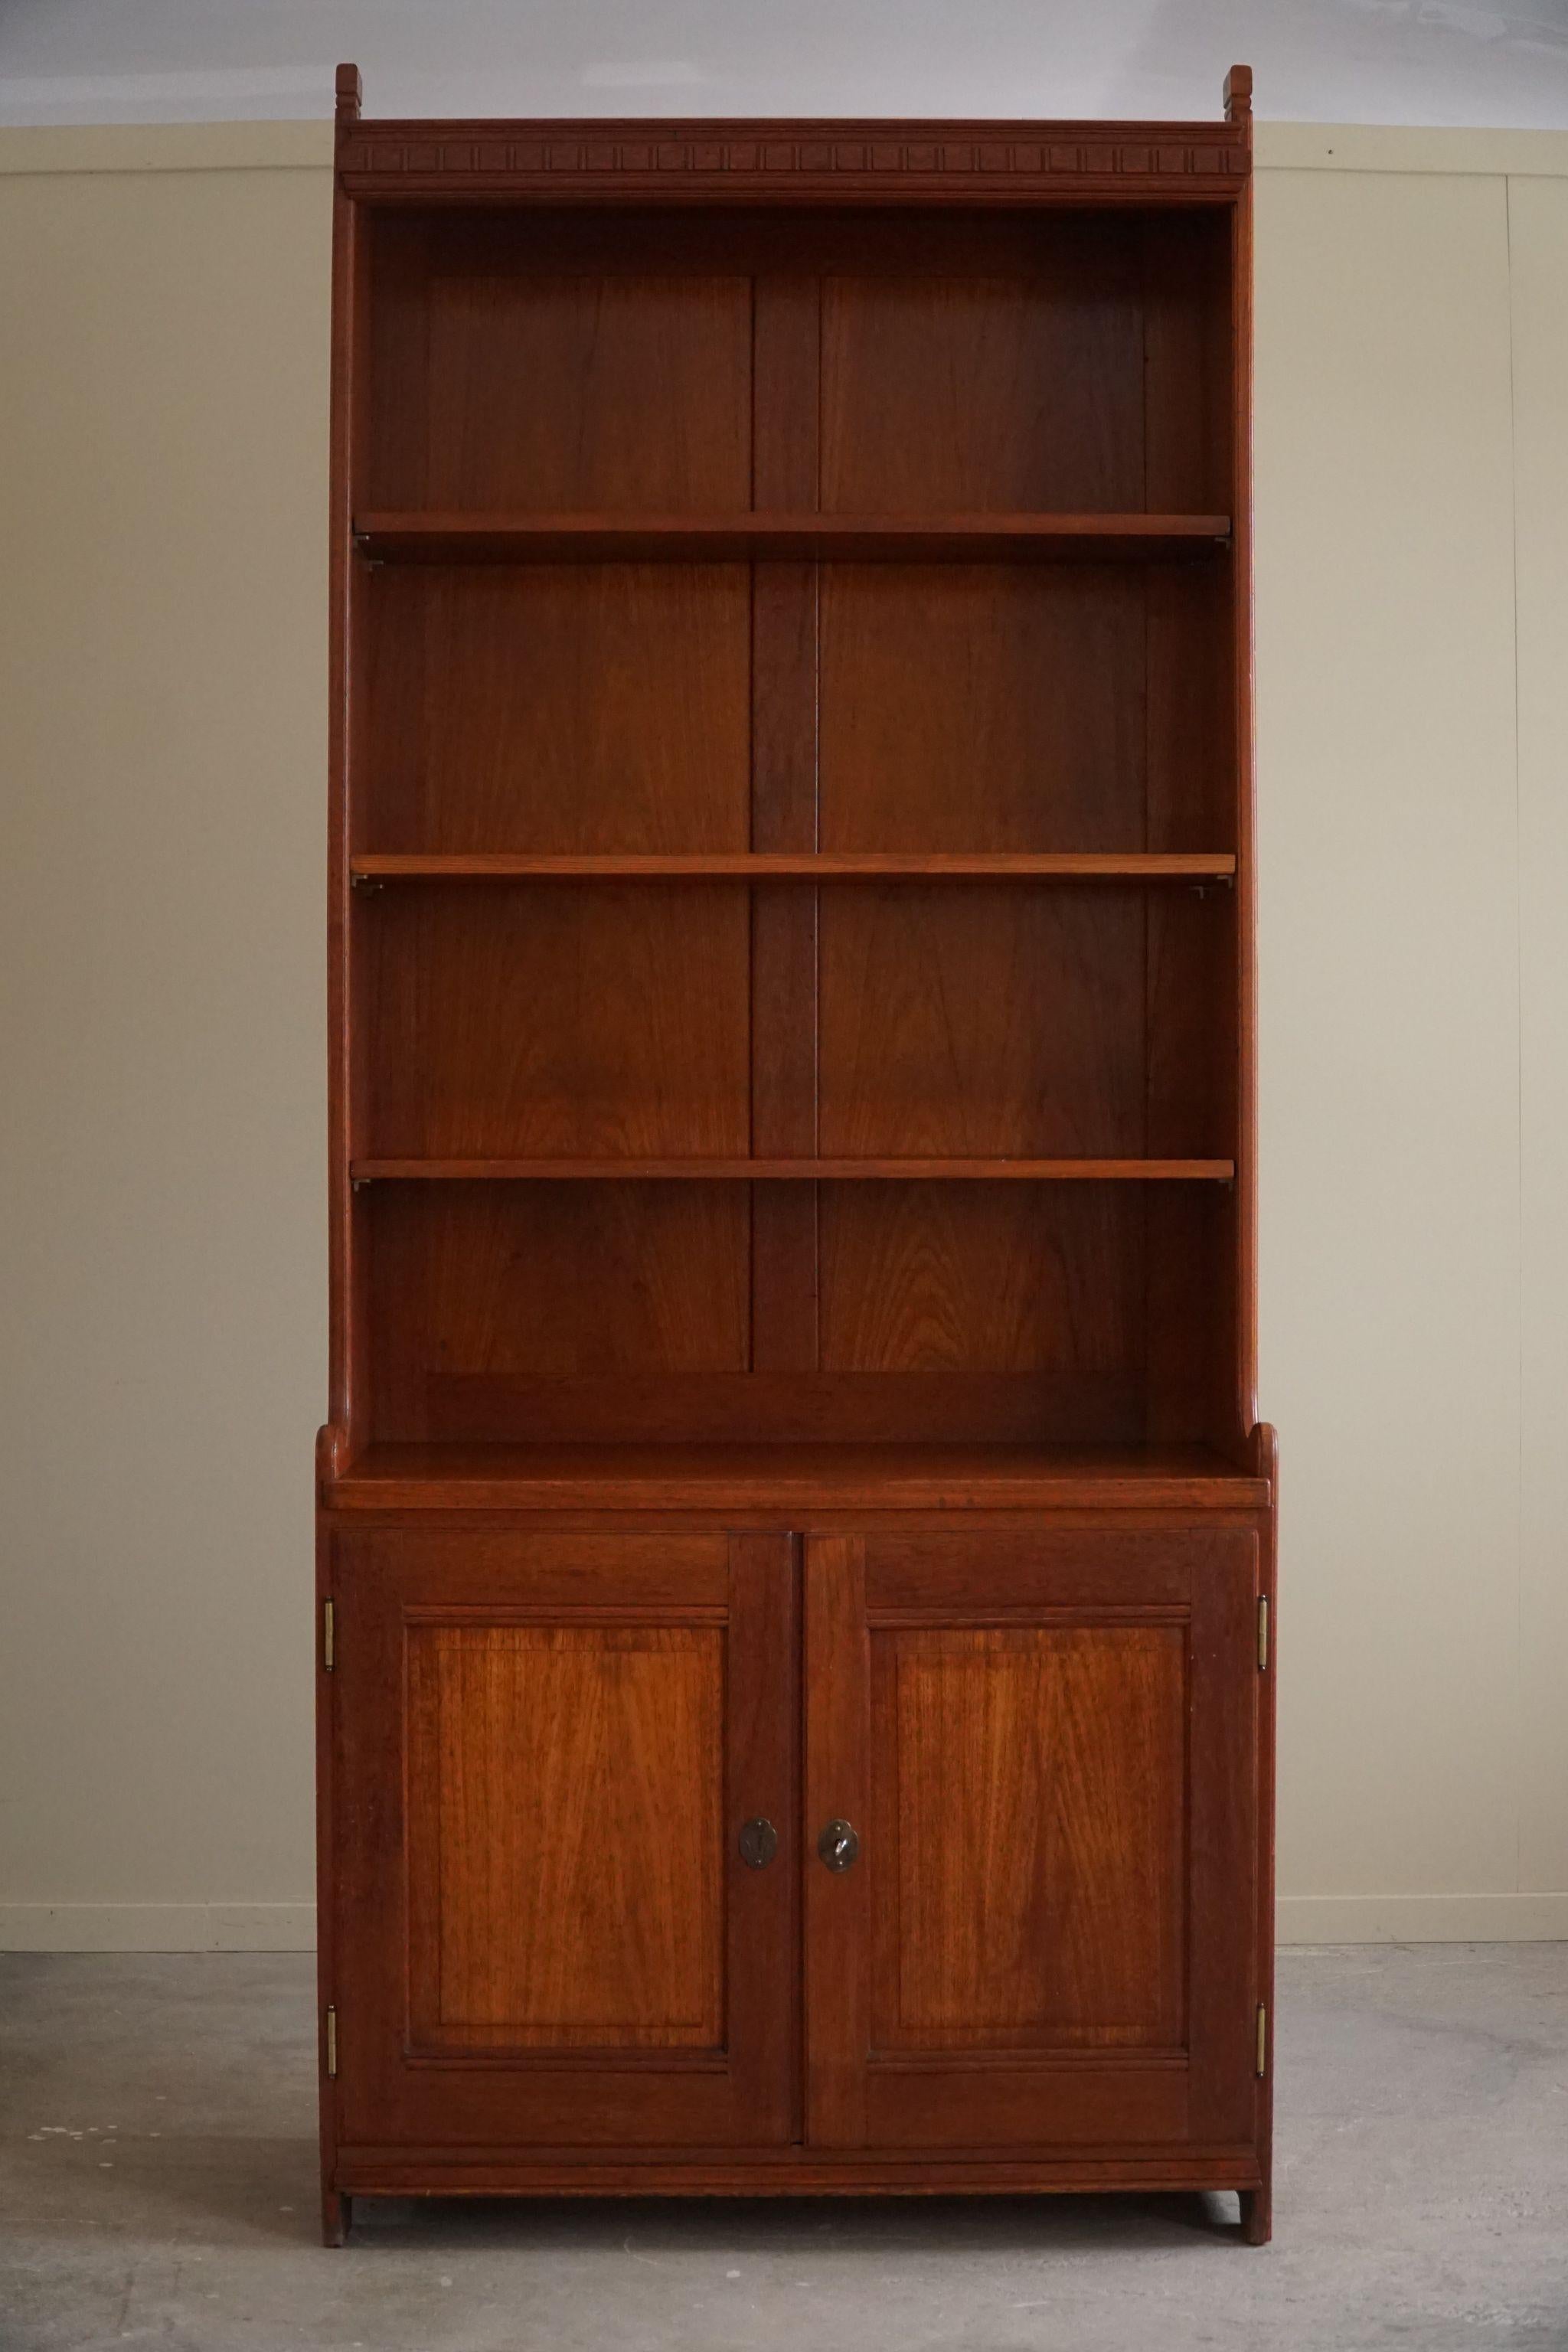 Martin Nyrop Cabinet by Rud. Rasmussen in Teak, Danish Modern, 1900-1920 For Sale 9